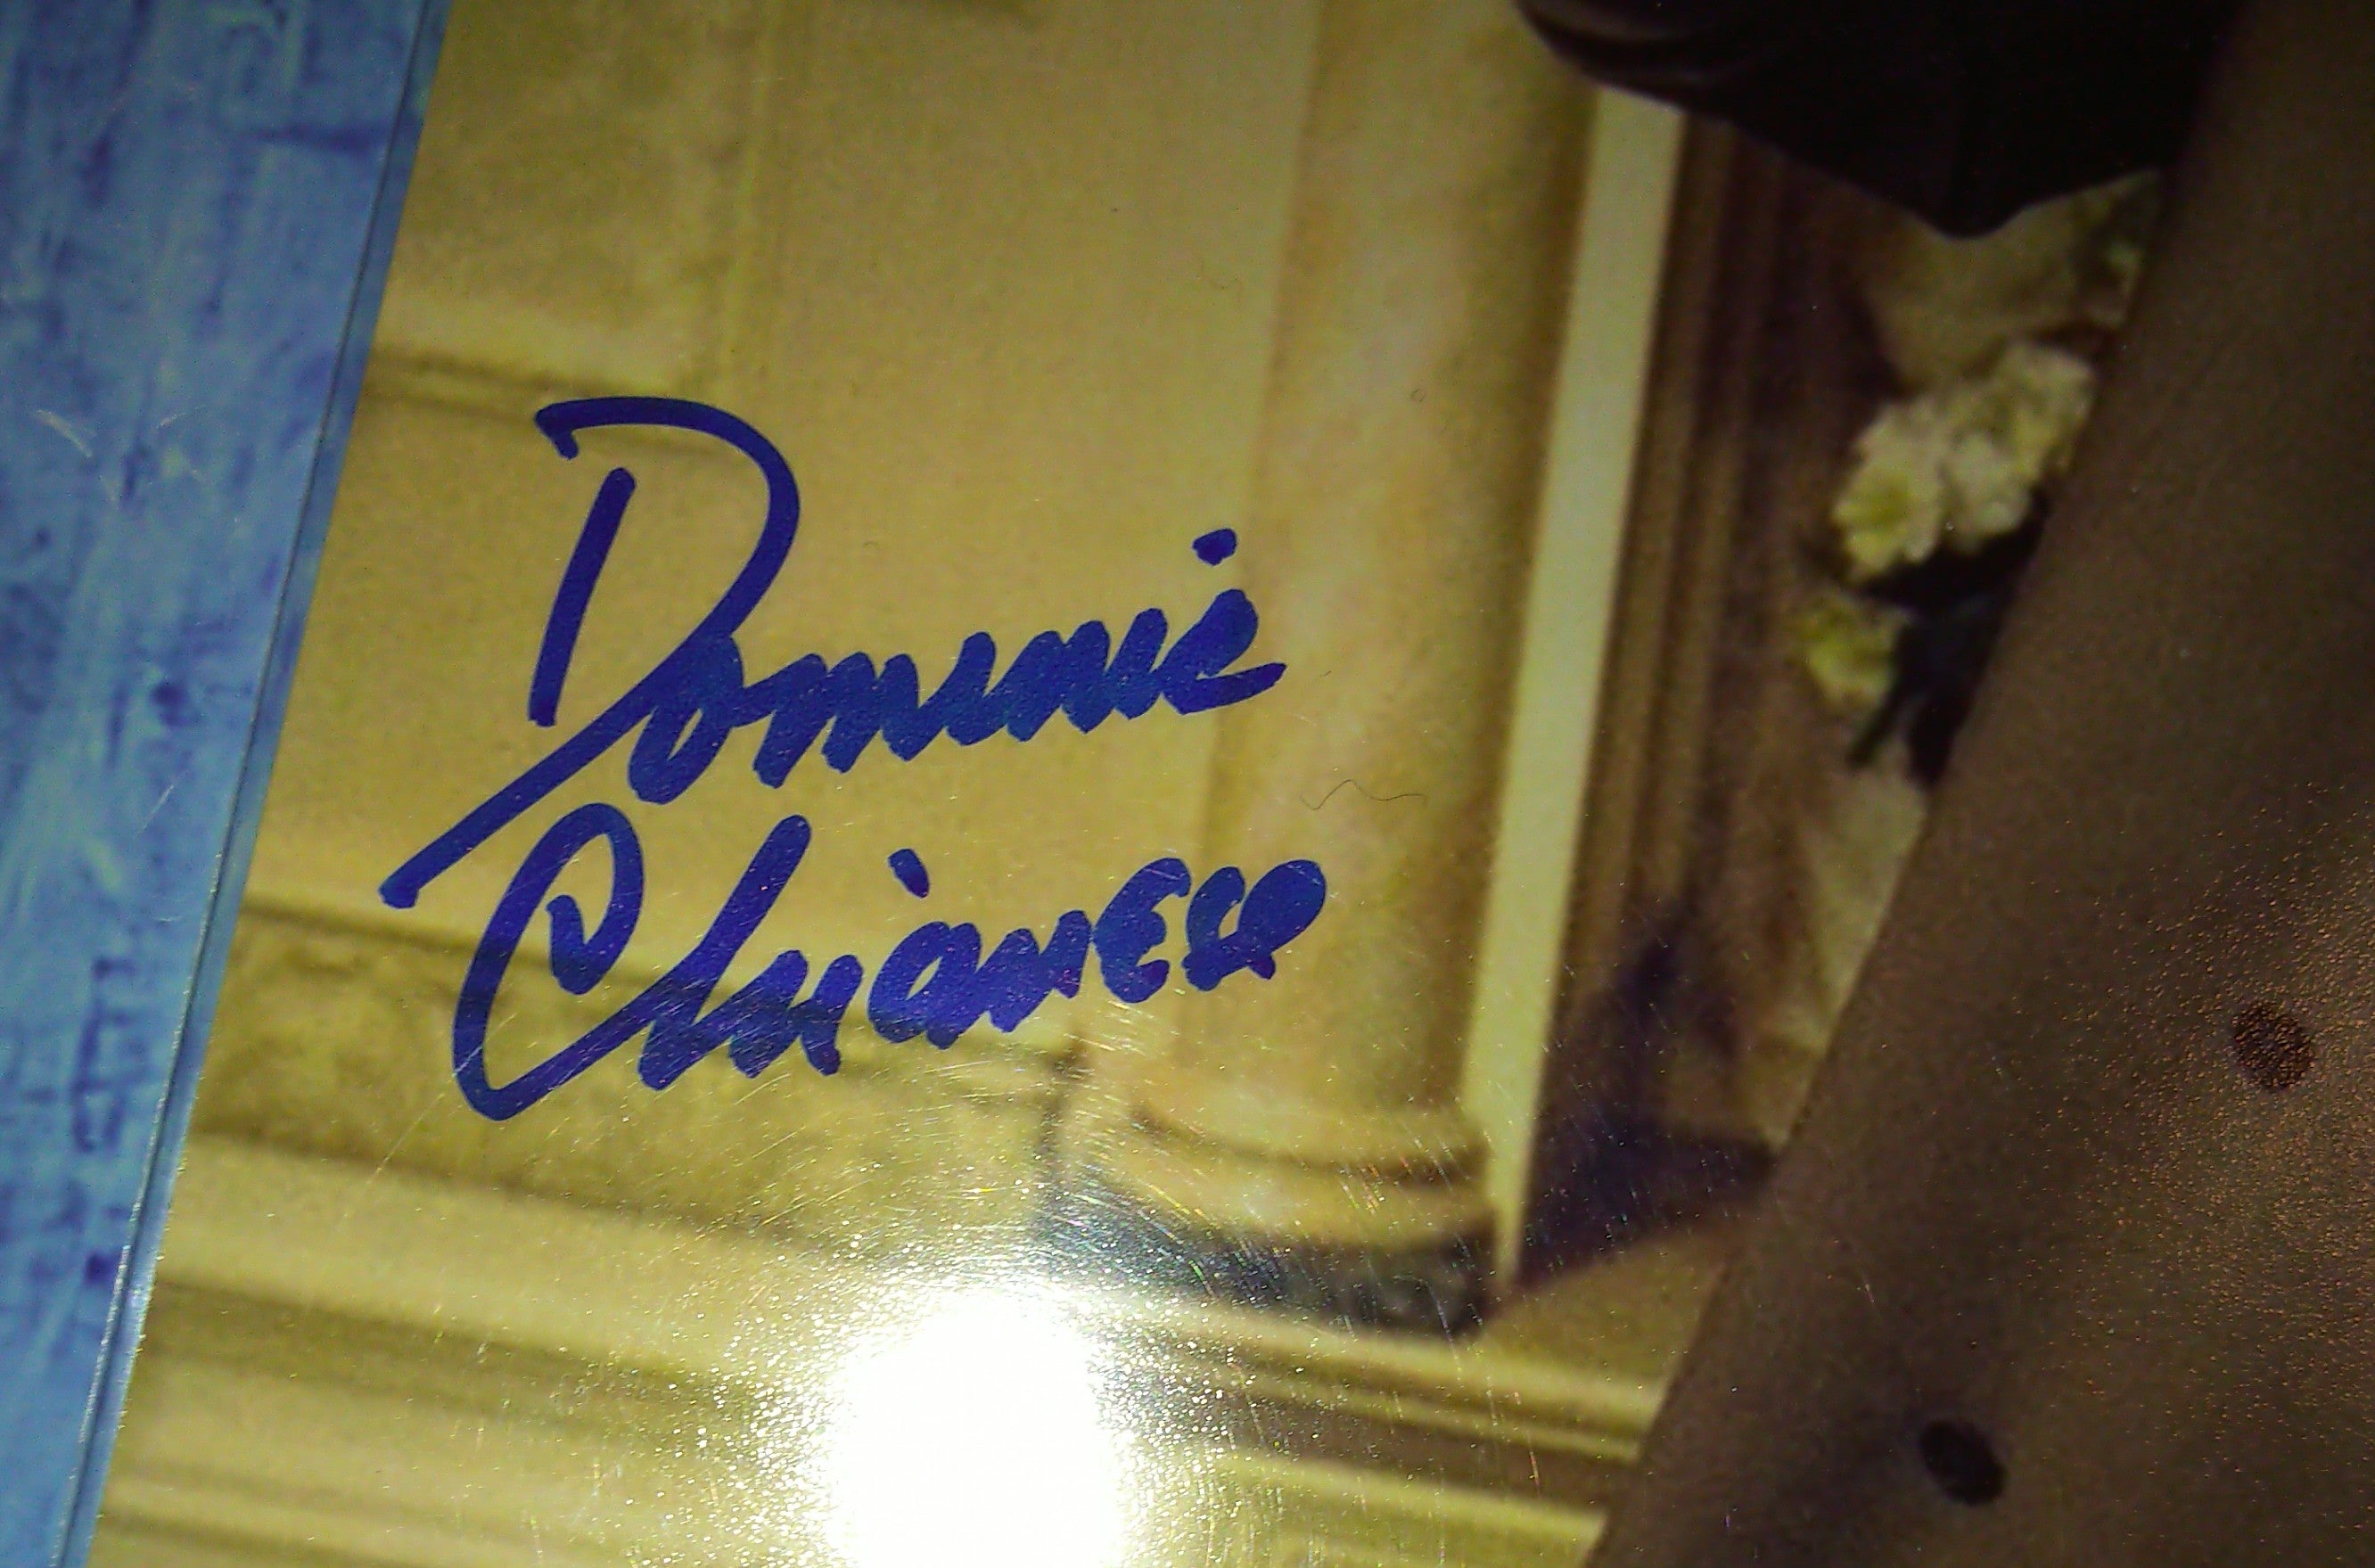 Dominic Chianese Hand Signed Autograph 8x10 Photo COA JSA